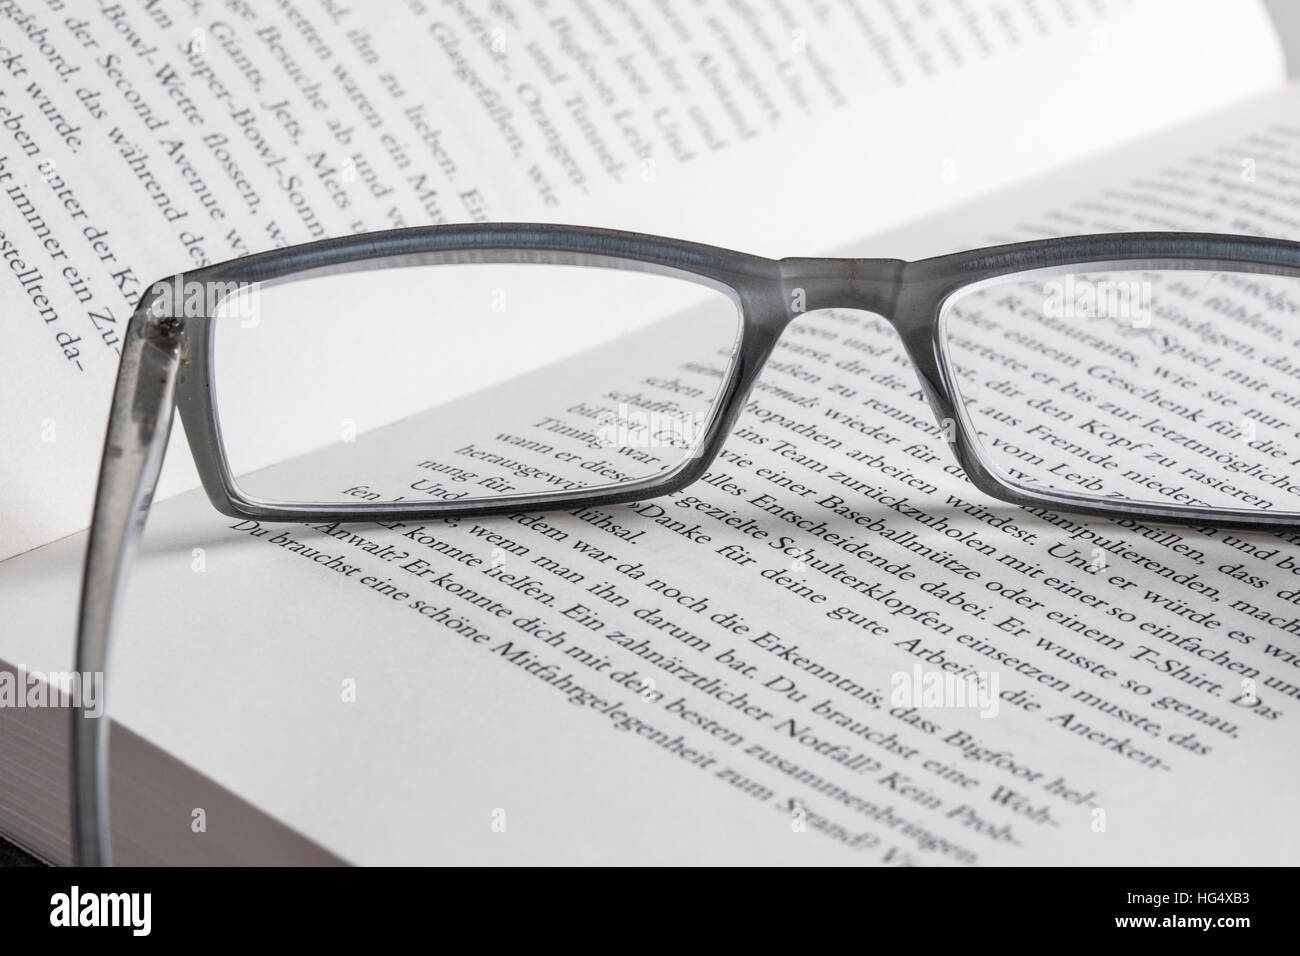 Reading aid, reading glasses, Stock Photo